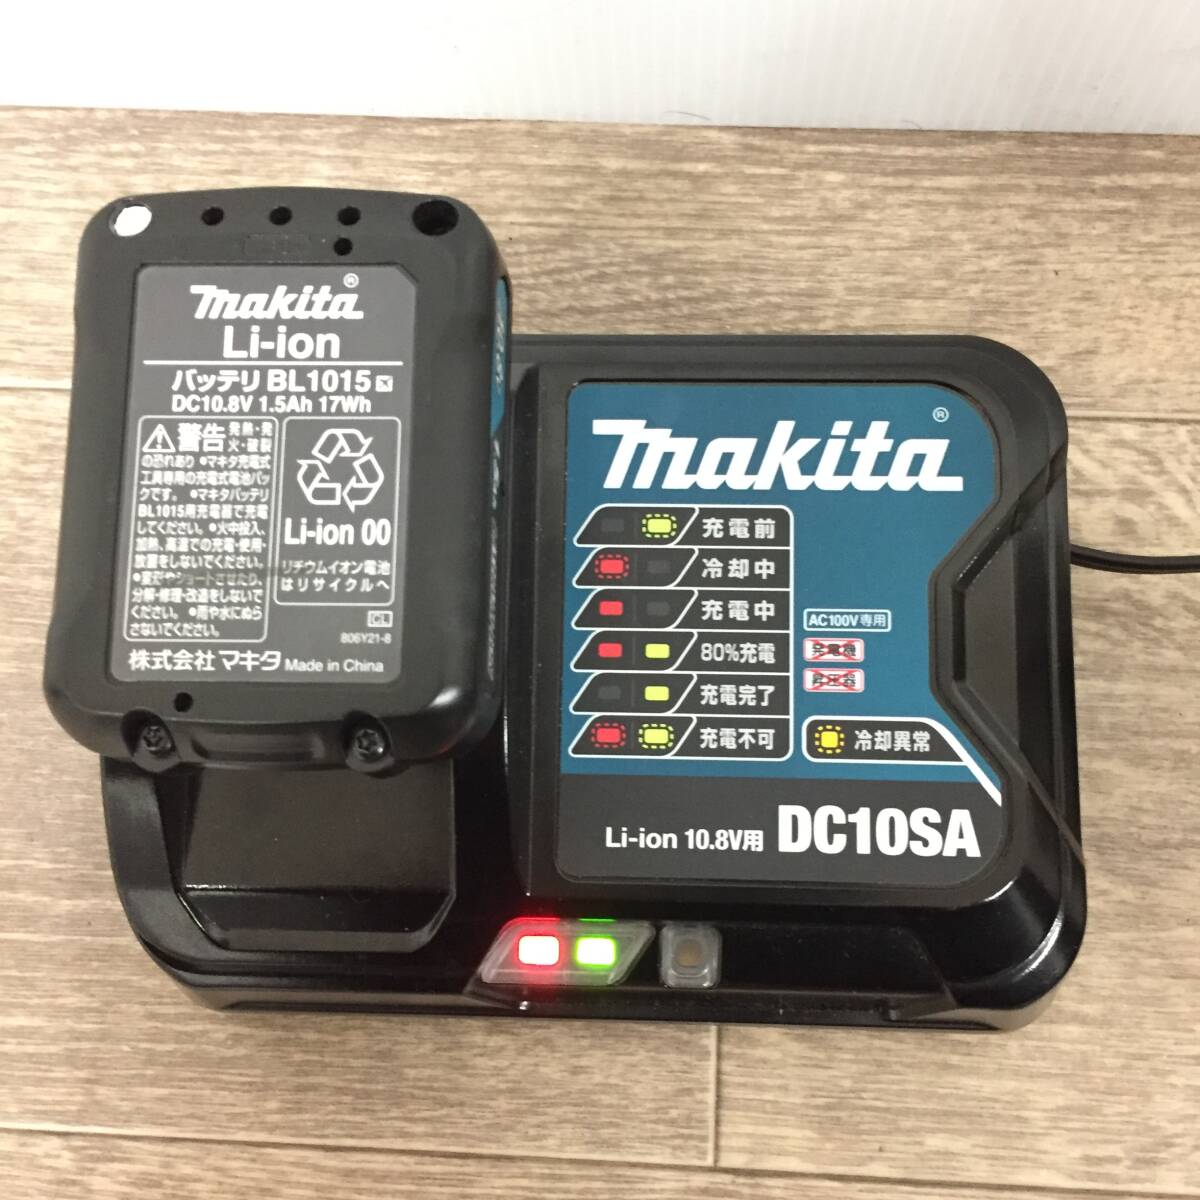 makita/マキタ コードレスクリーナー CL107FD スティックタイプ 充電式 紙タイプ式 掃除機 充電器/紙パック付 共通バッテリー 24d菊MZ_画像5